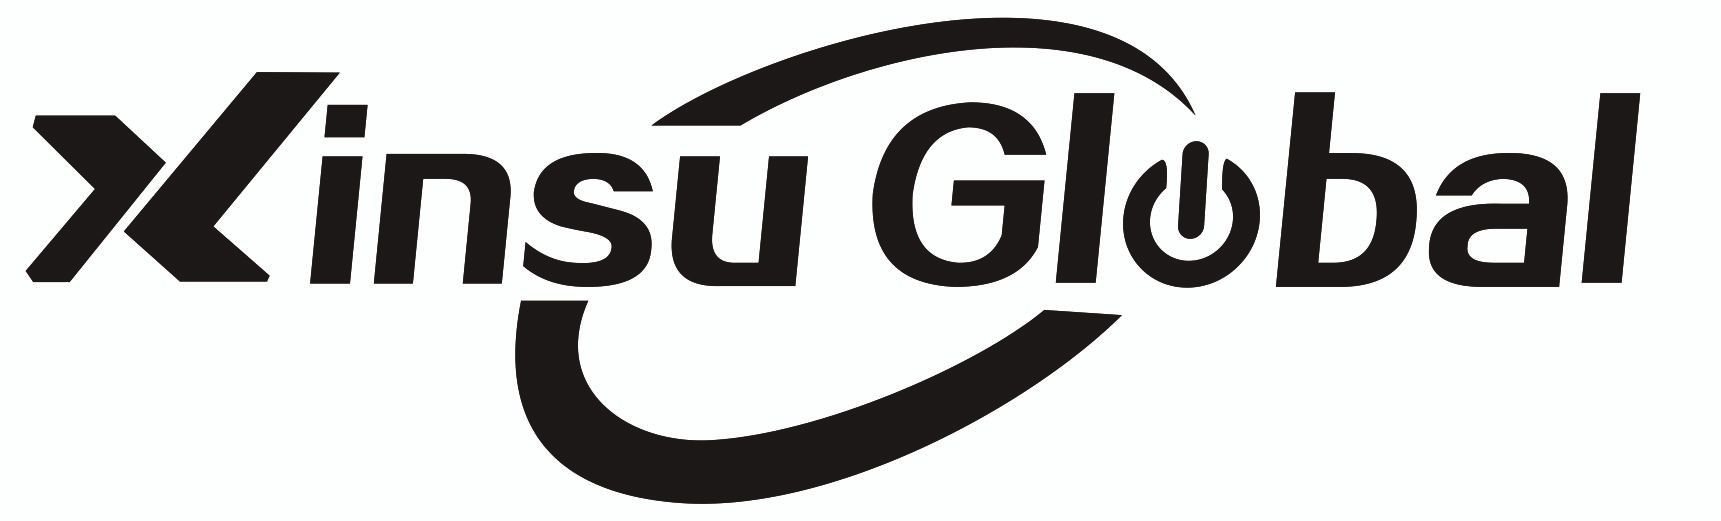 Xinsu Global Electronic Co.,Limited logo